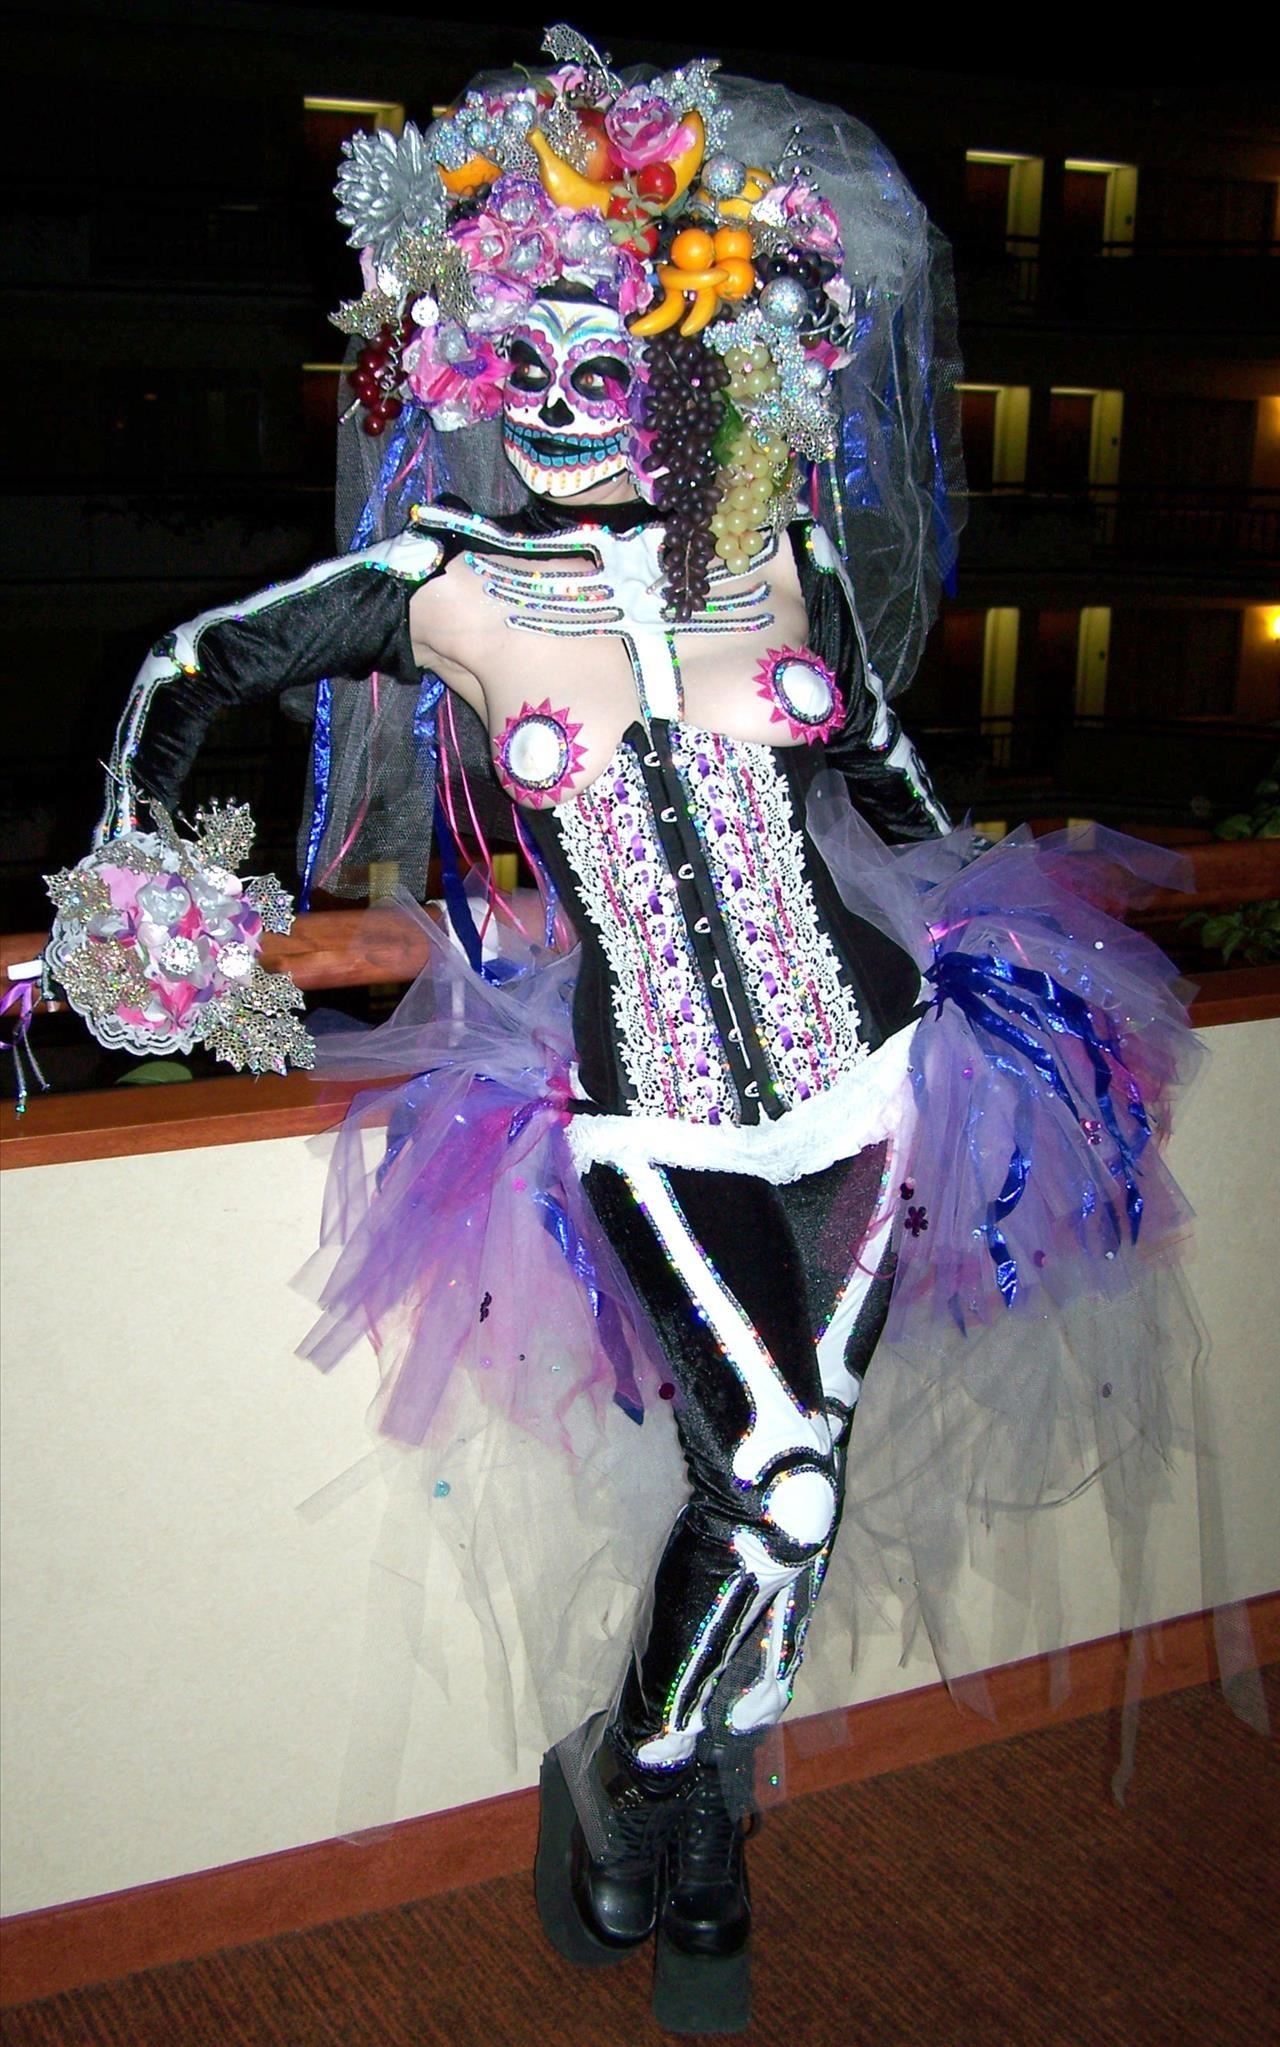 The 15 Best Sugar Skull Makeup Looks for Halloween « Halloween Ideas ... Devil Costume For Women Makeup